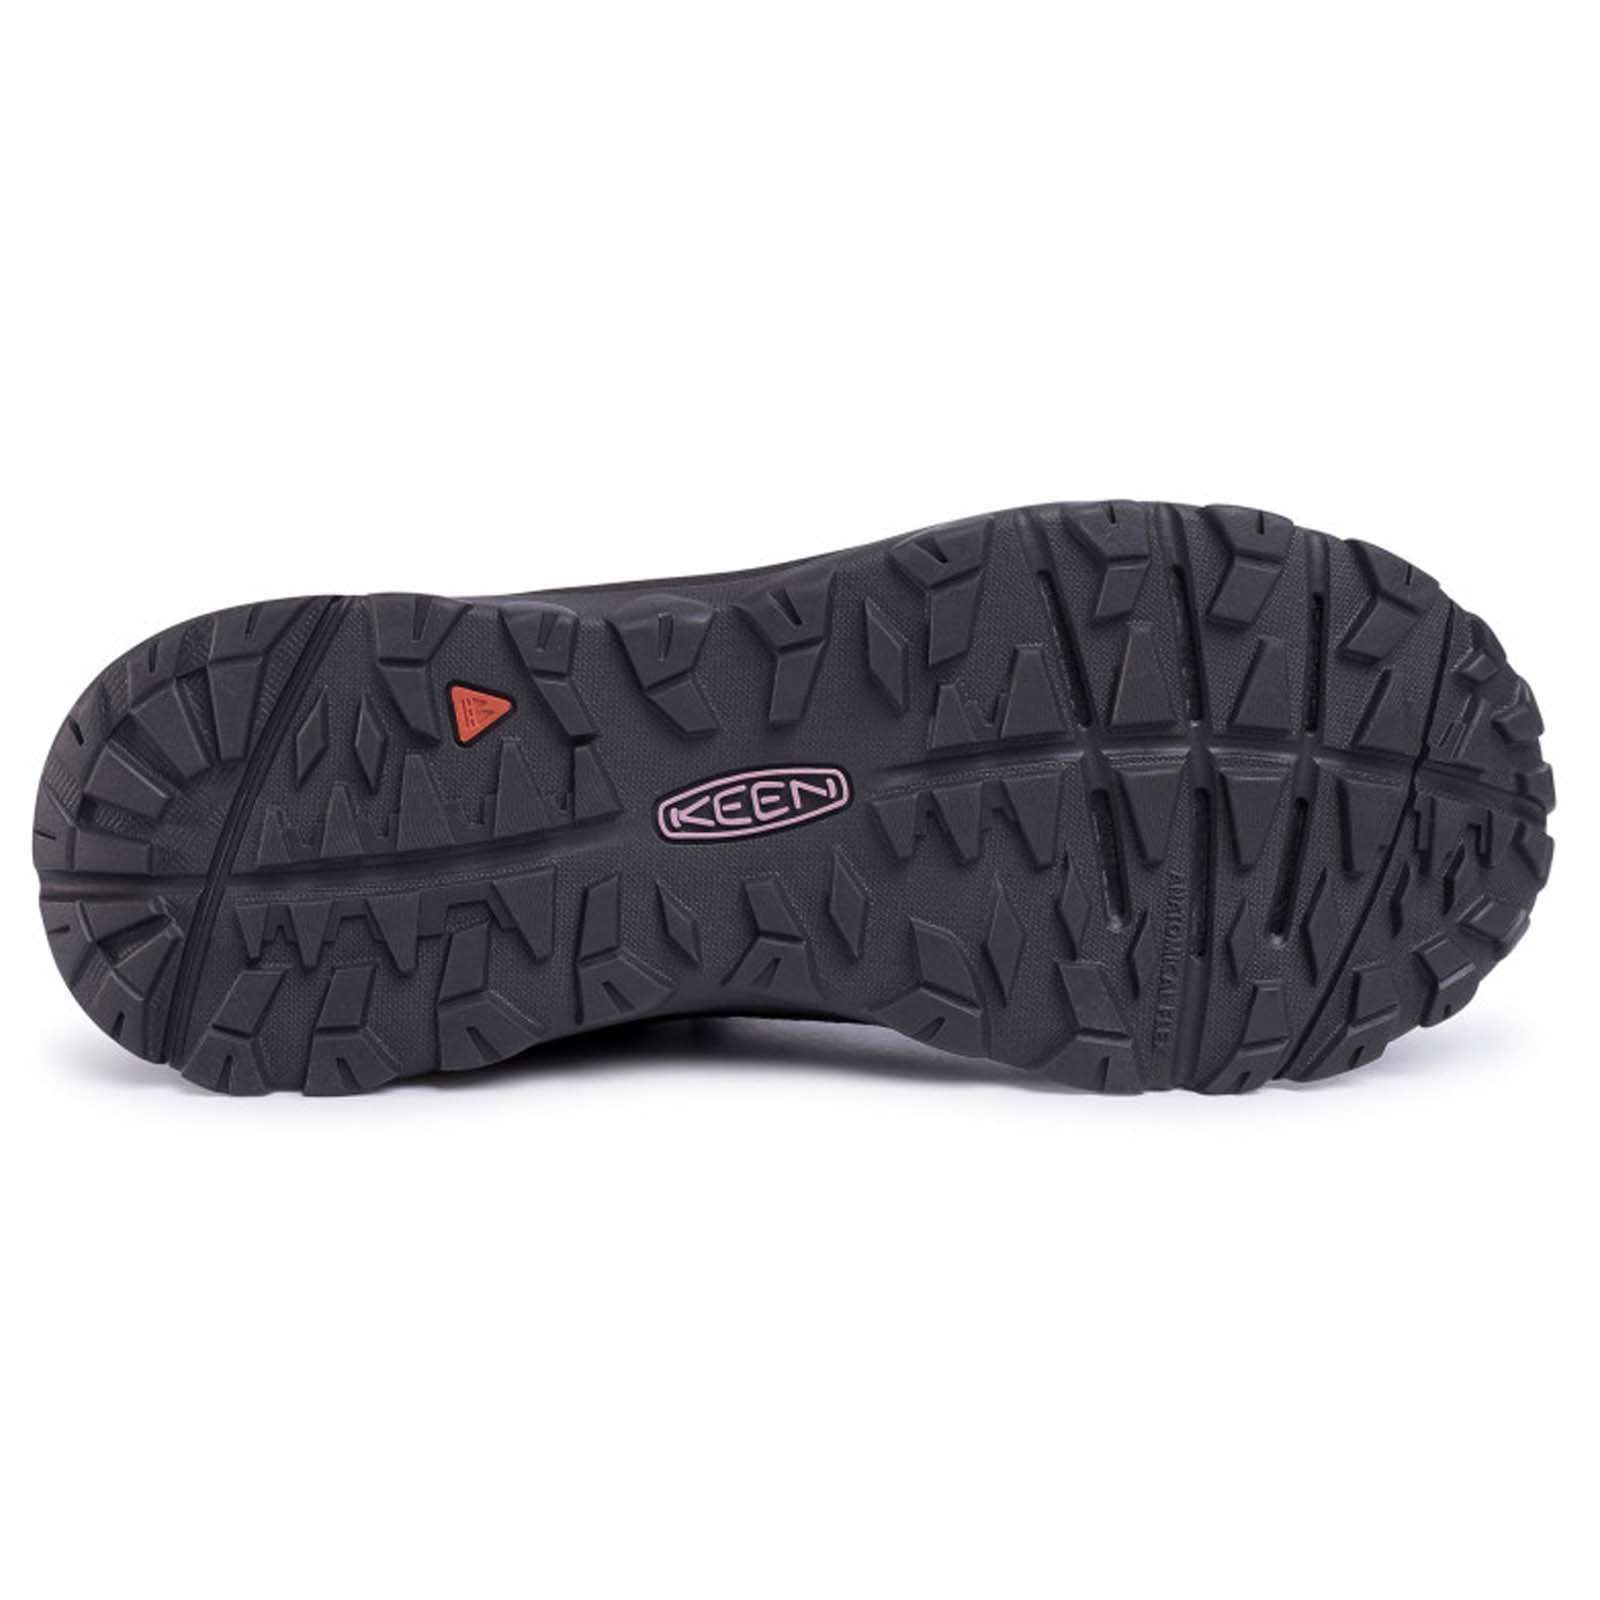 Keen Terradora II Mid Synthetic Textile Women's Hiking Boots